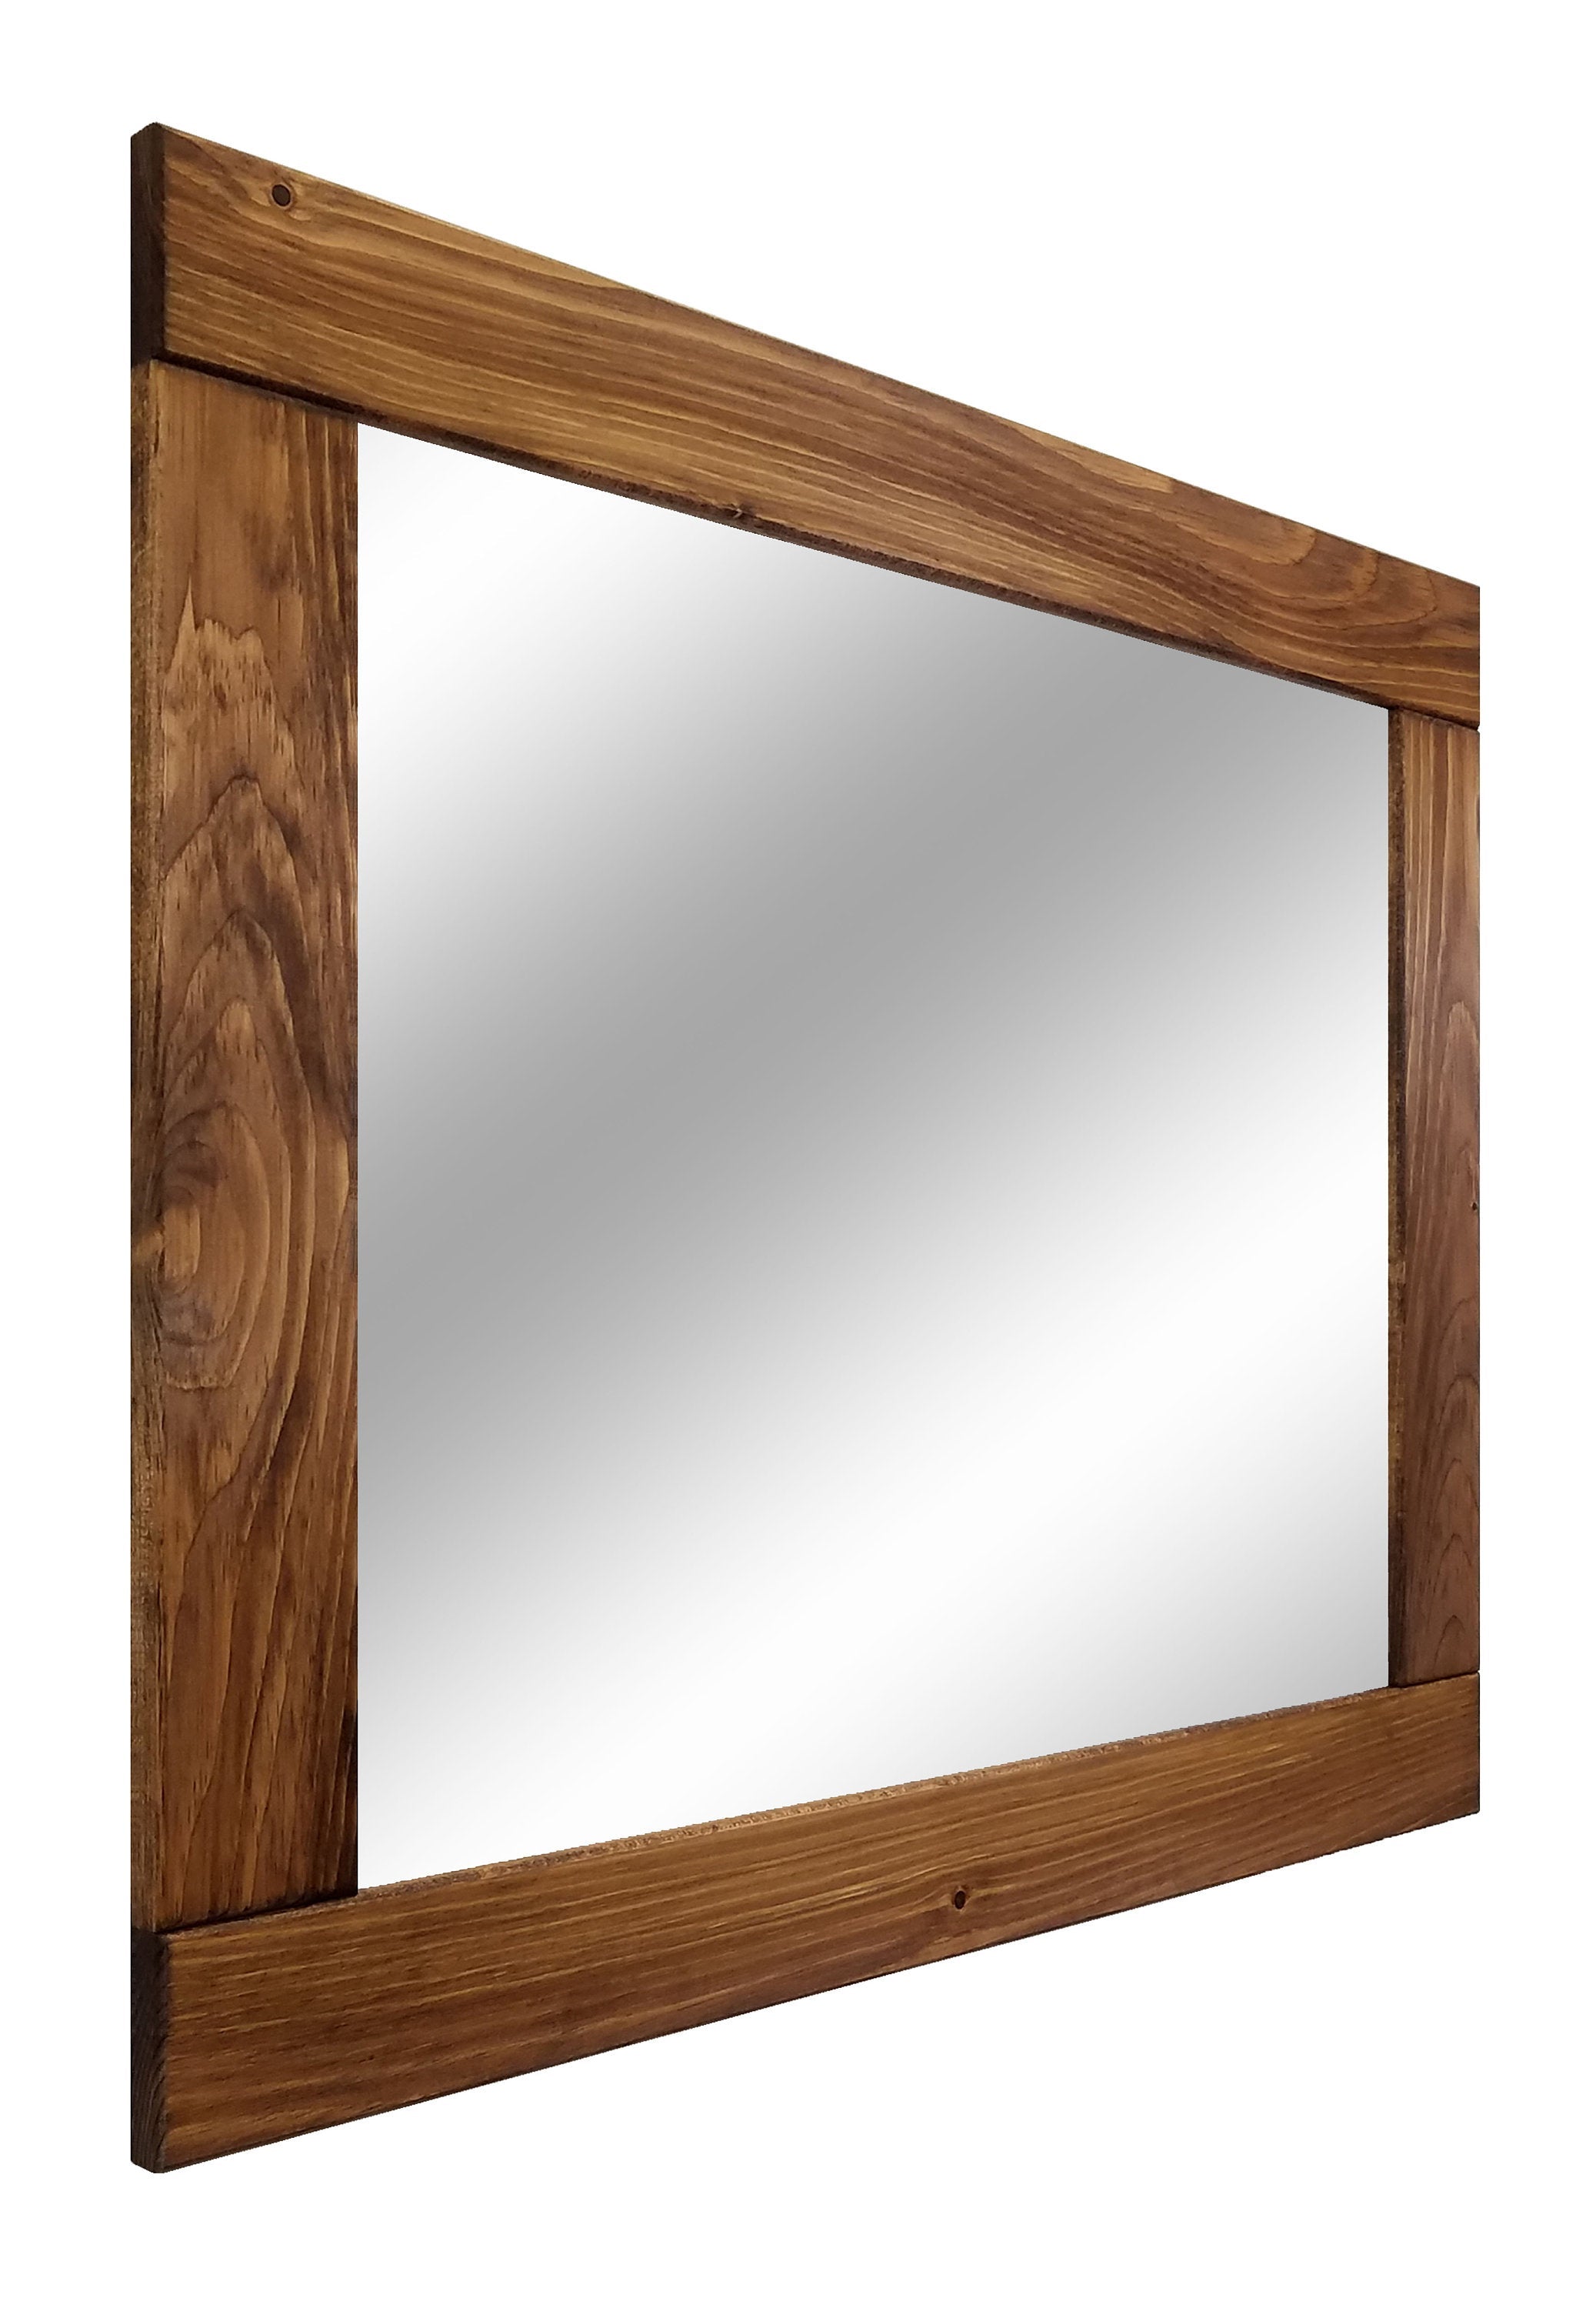 Natural Rustic Wall Mirror, Reclaimed Styled Wood Mirror, Farmhouse Bathroom Decor, Rustic Bathroom Mirror, Mirror Wall Decor - Renewed Decor & Storage